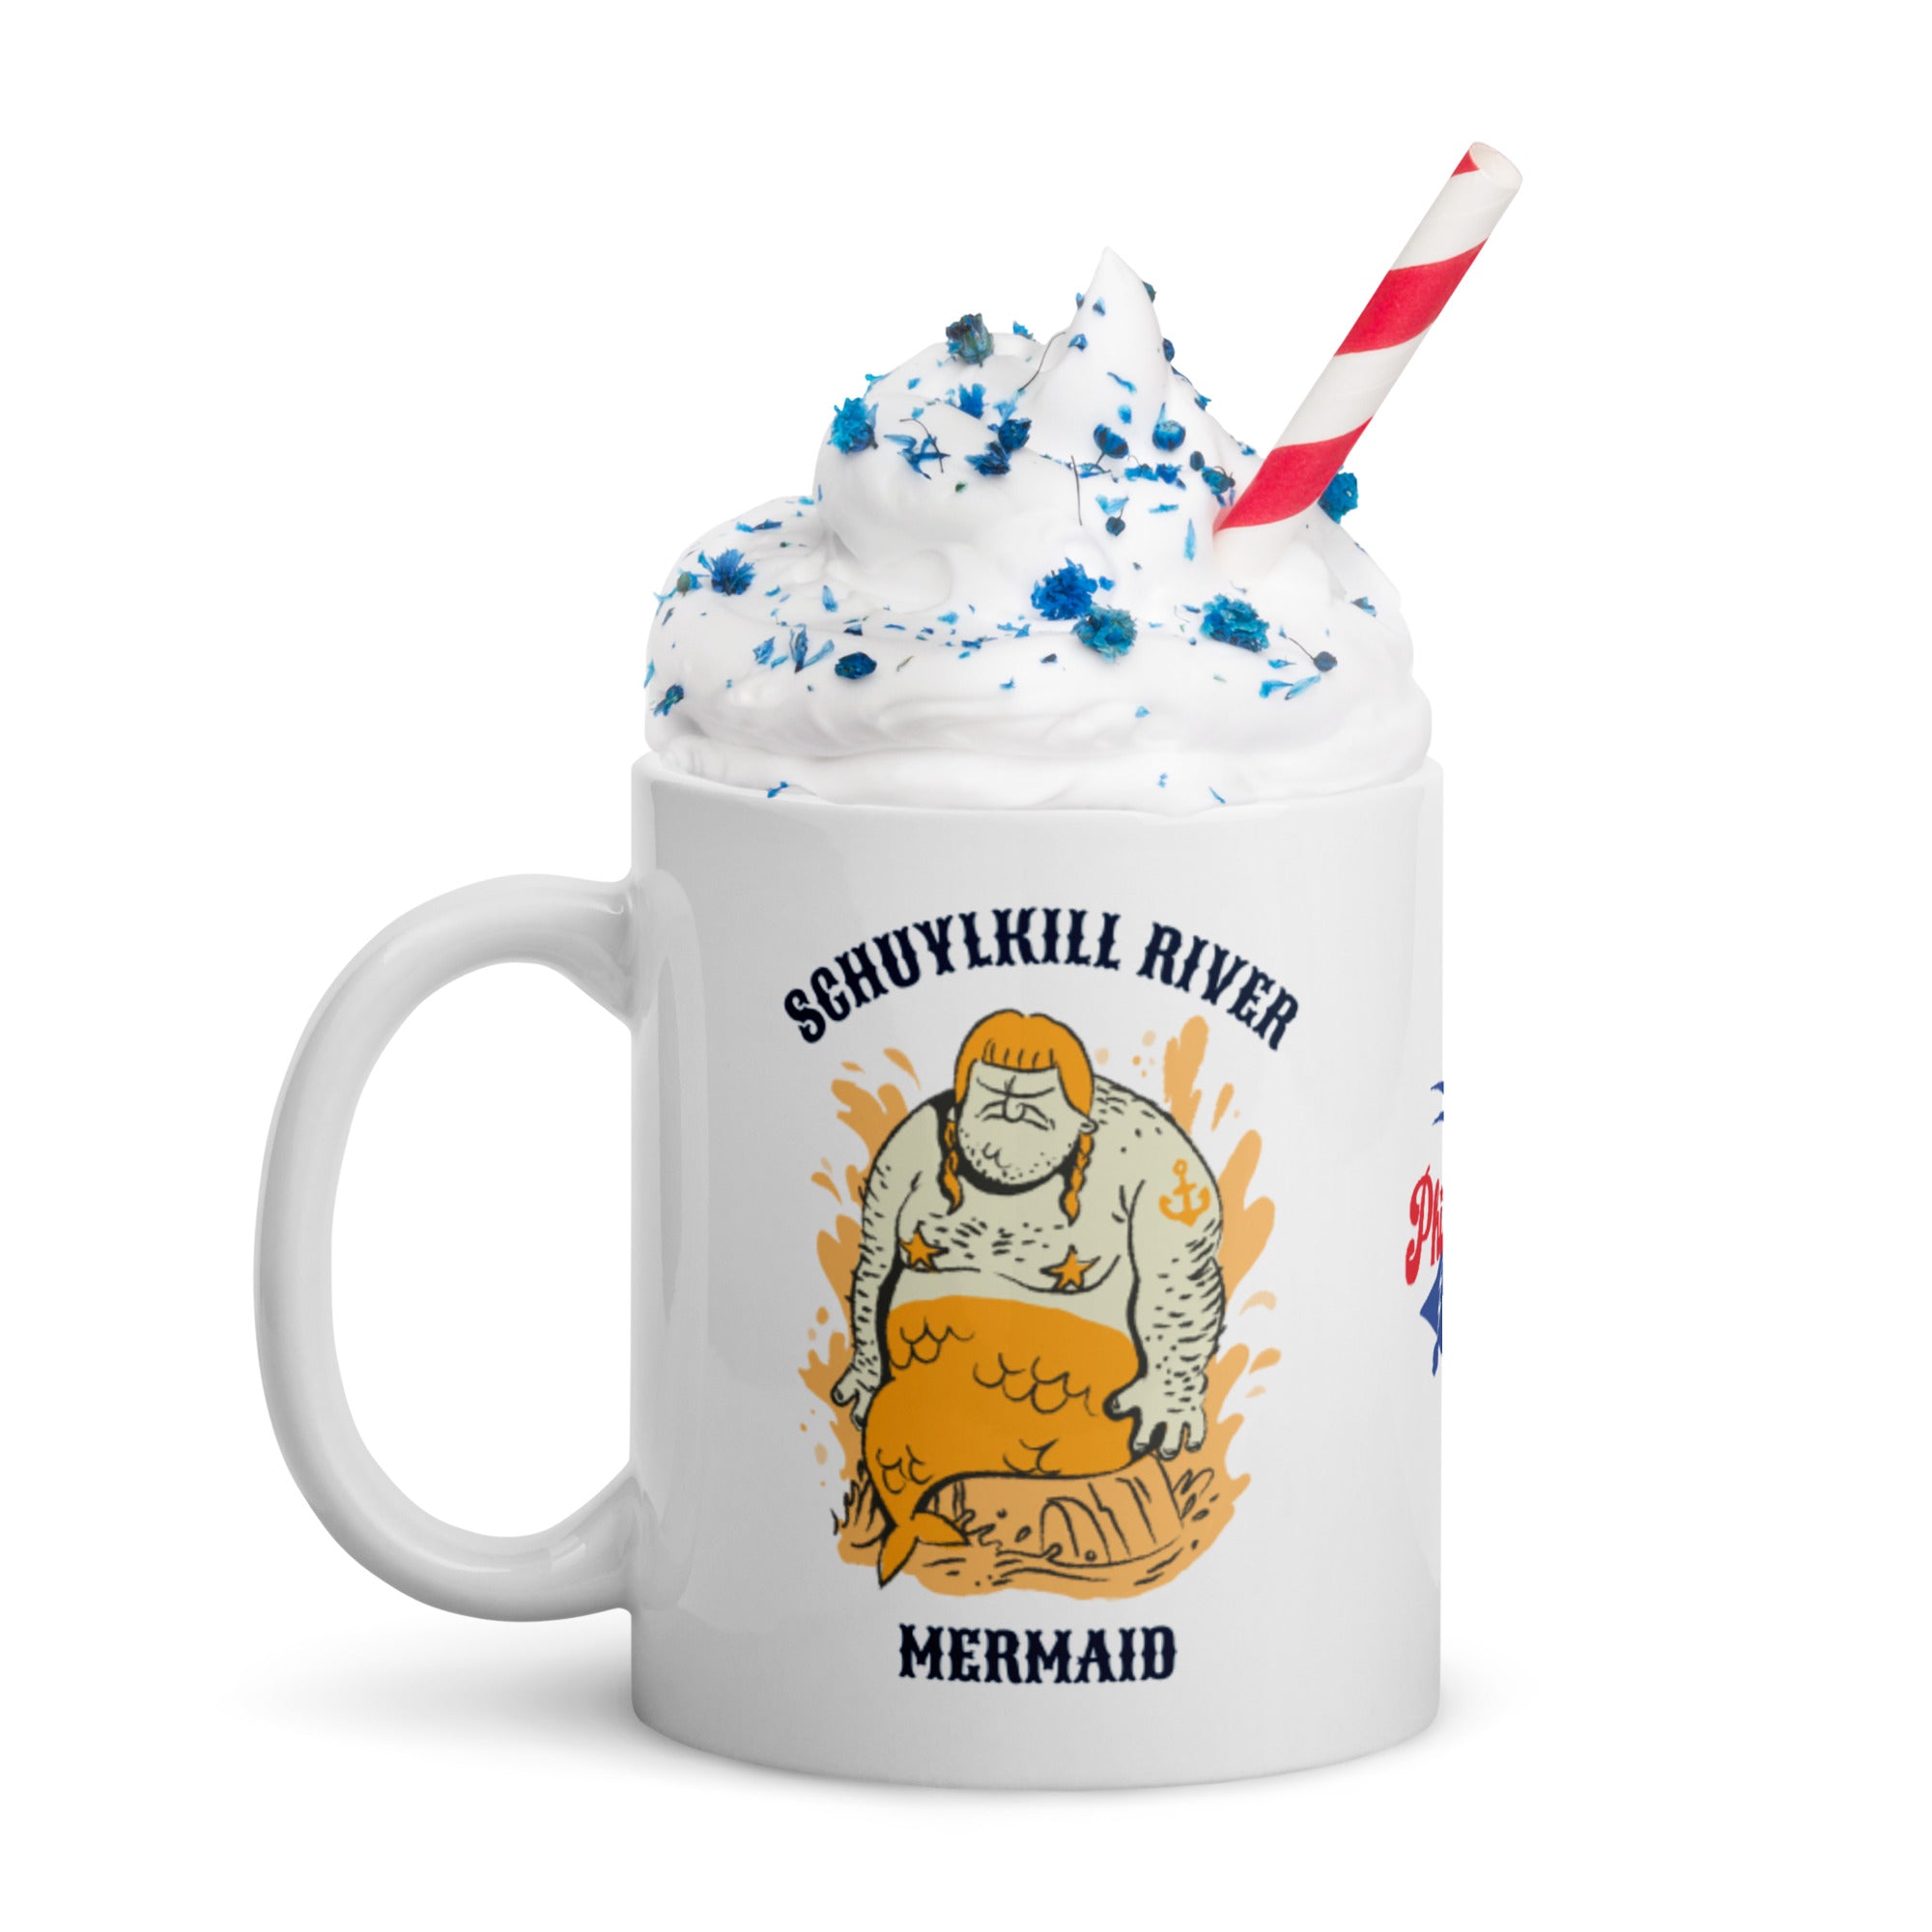 Schuylkill River Mermaid Mug, Philadelphia